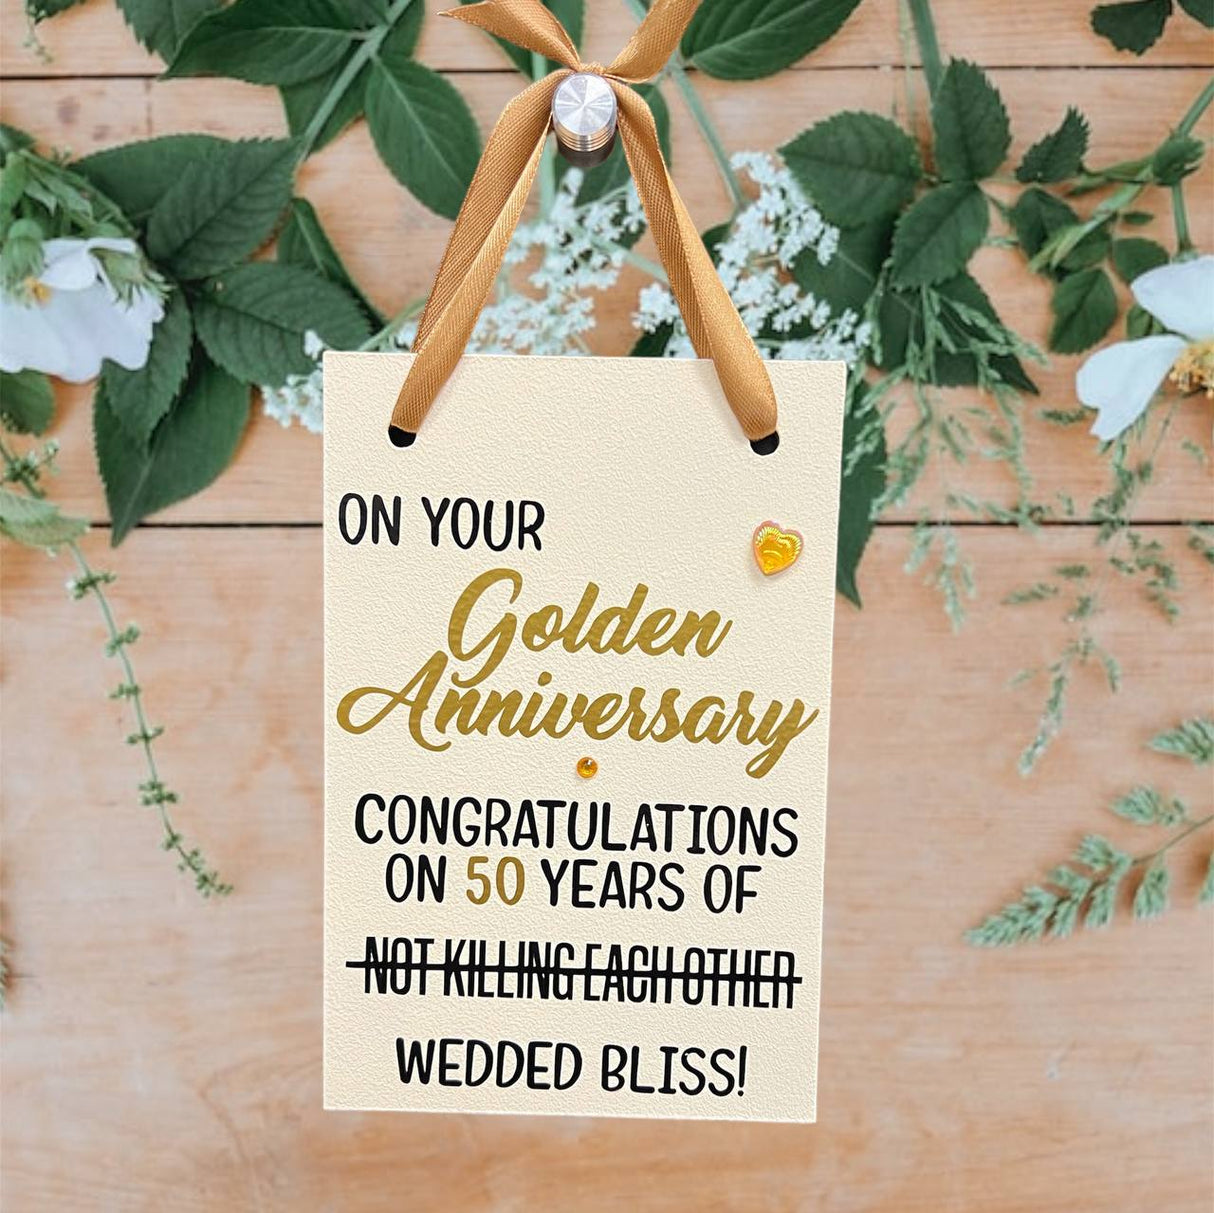 Golden Anniversary - Wedded Bliss!